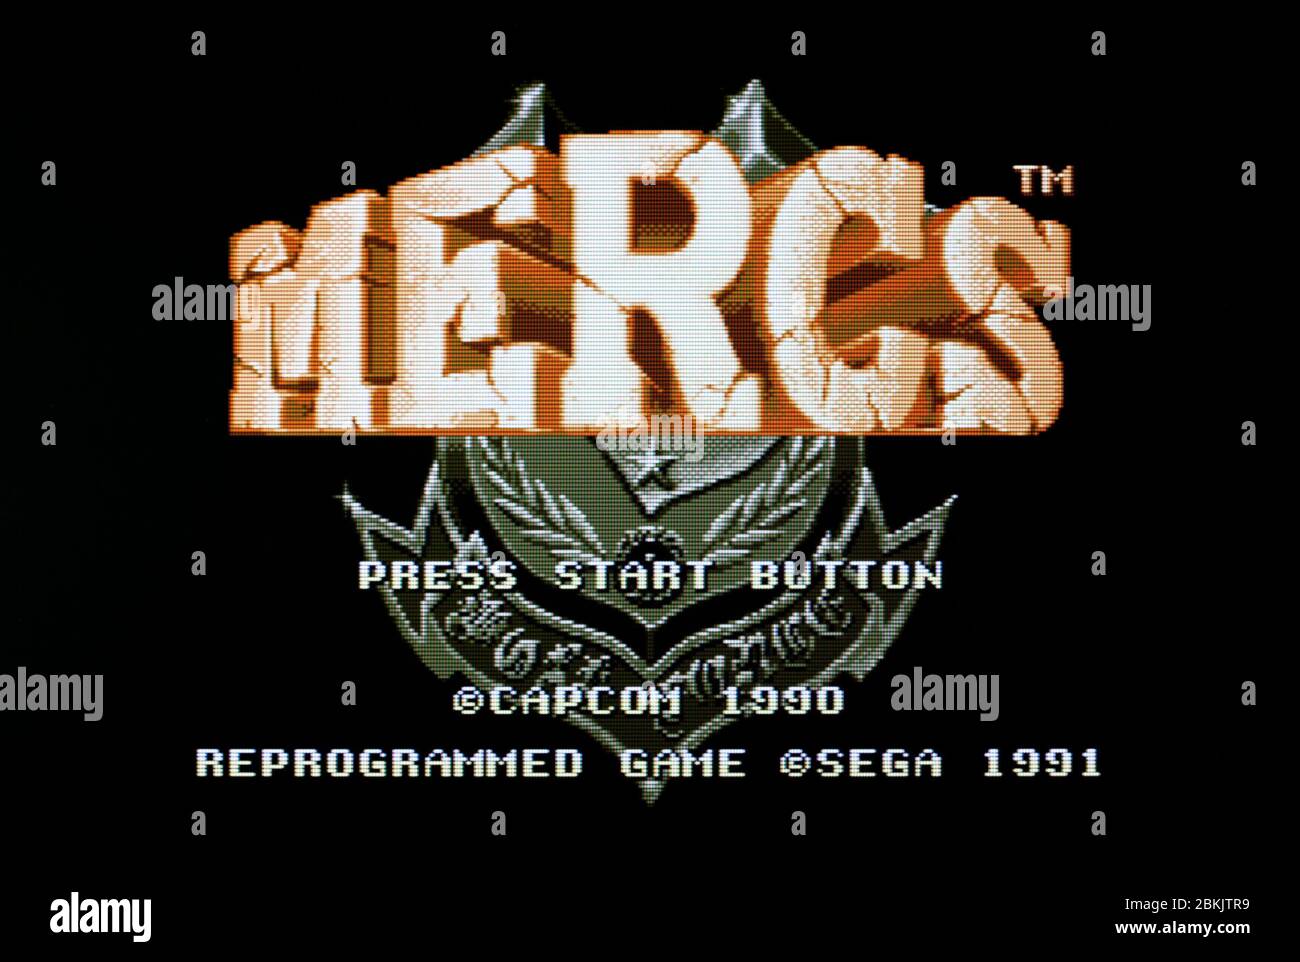 Mercs - sega Genesis Mega Drive - solo per uso editoriale Foto Stock